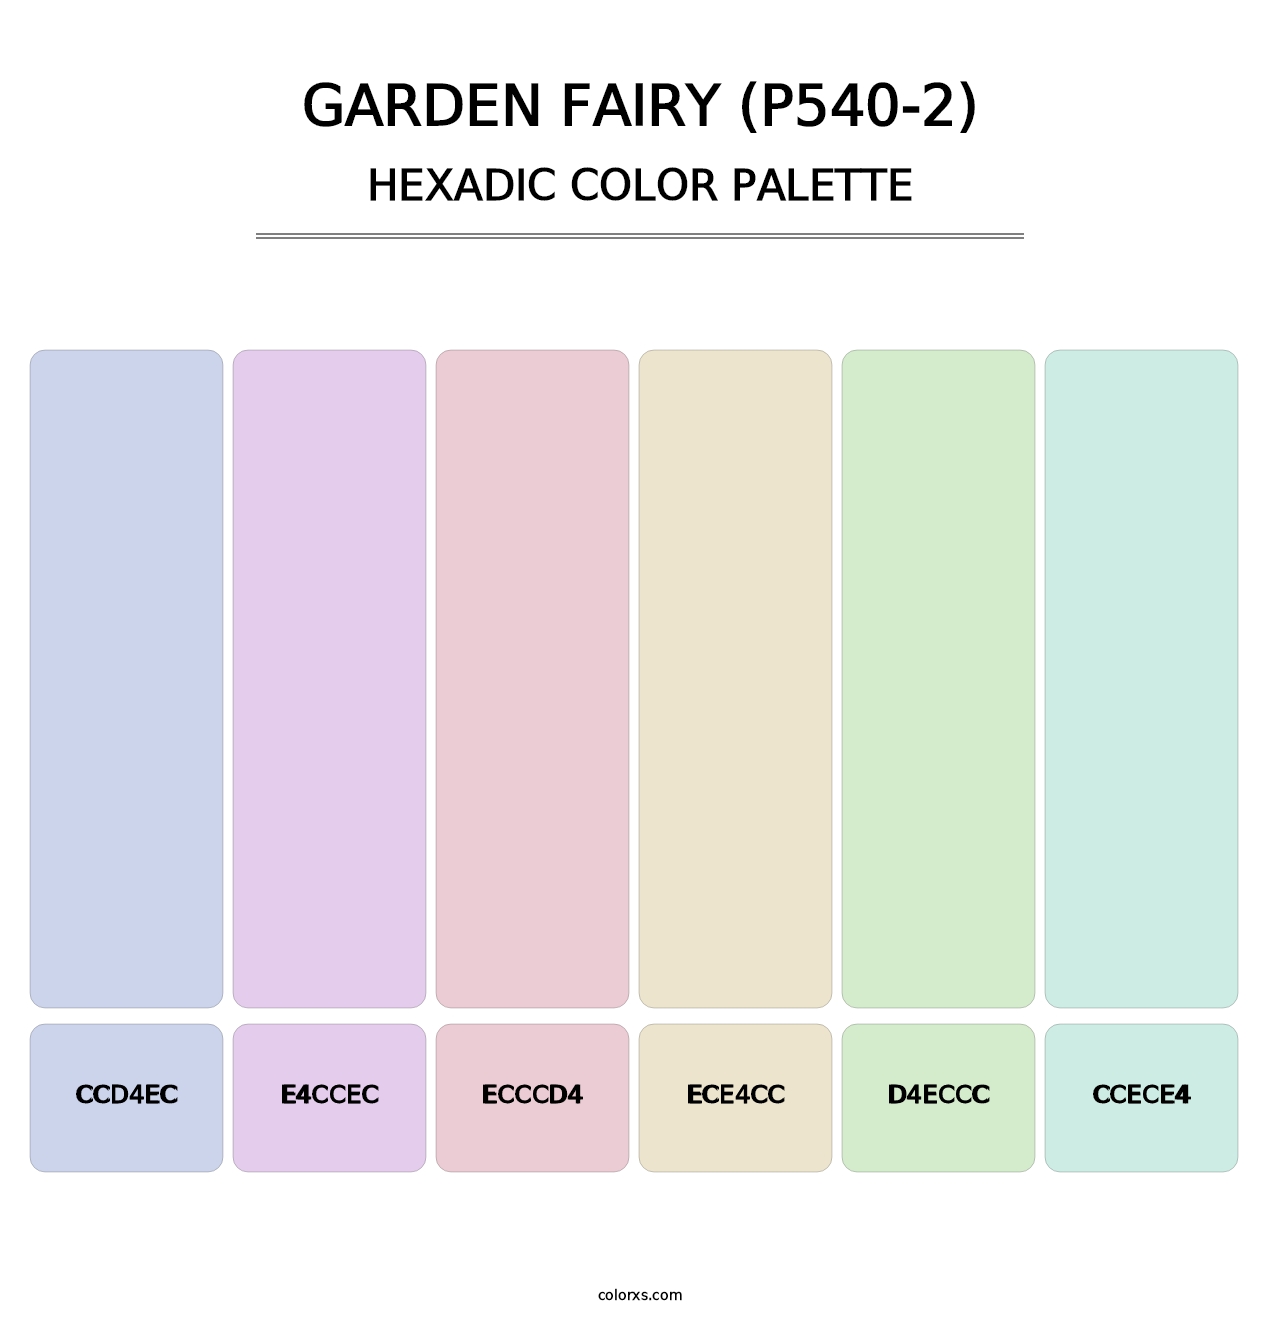 Garden Fairy (P540-2) - Hexadic Color Palette